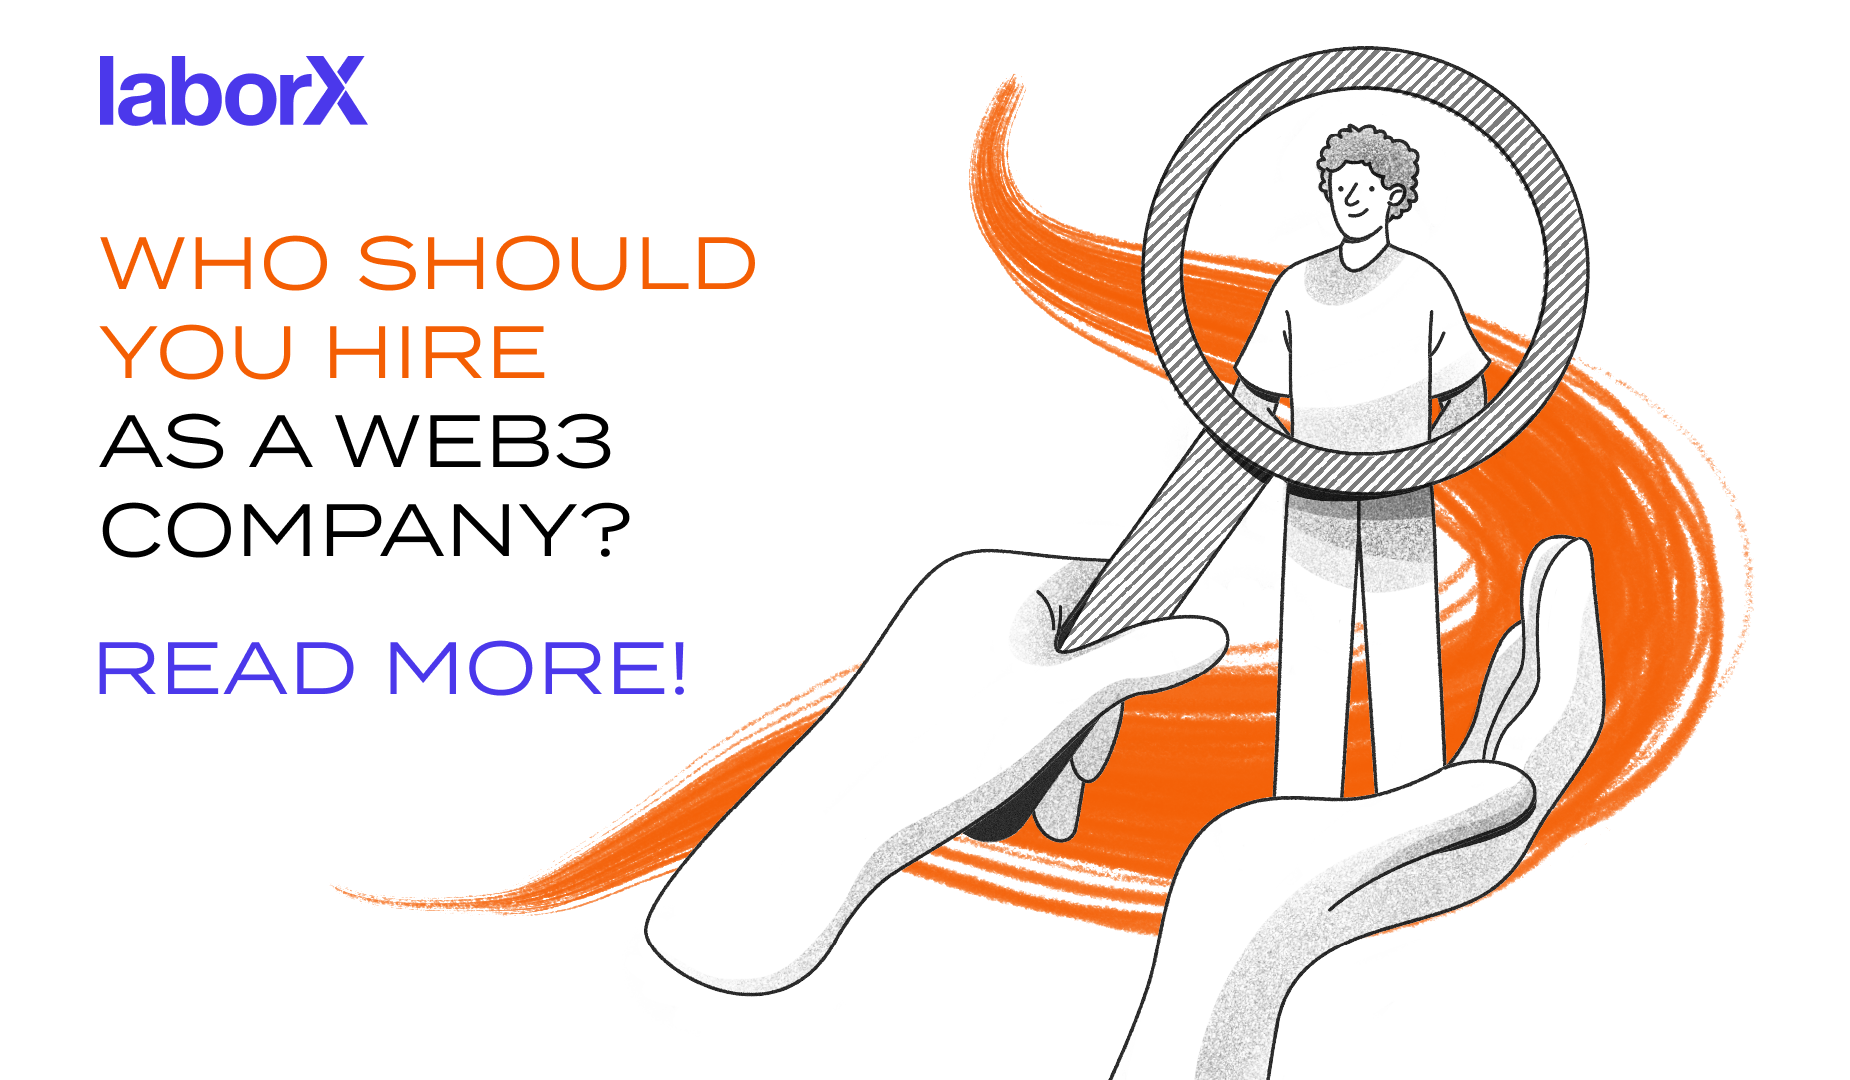 Who Should You Hire As A Web3 Company?